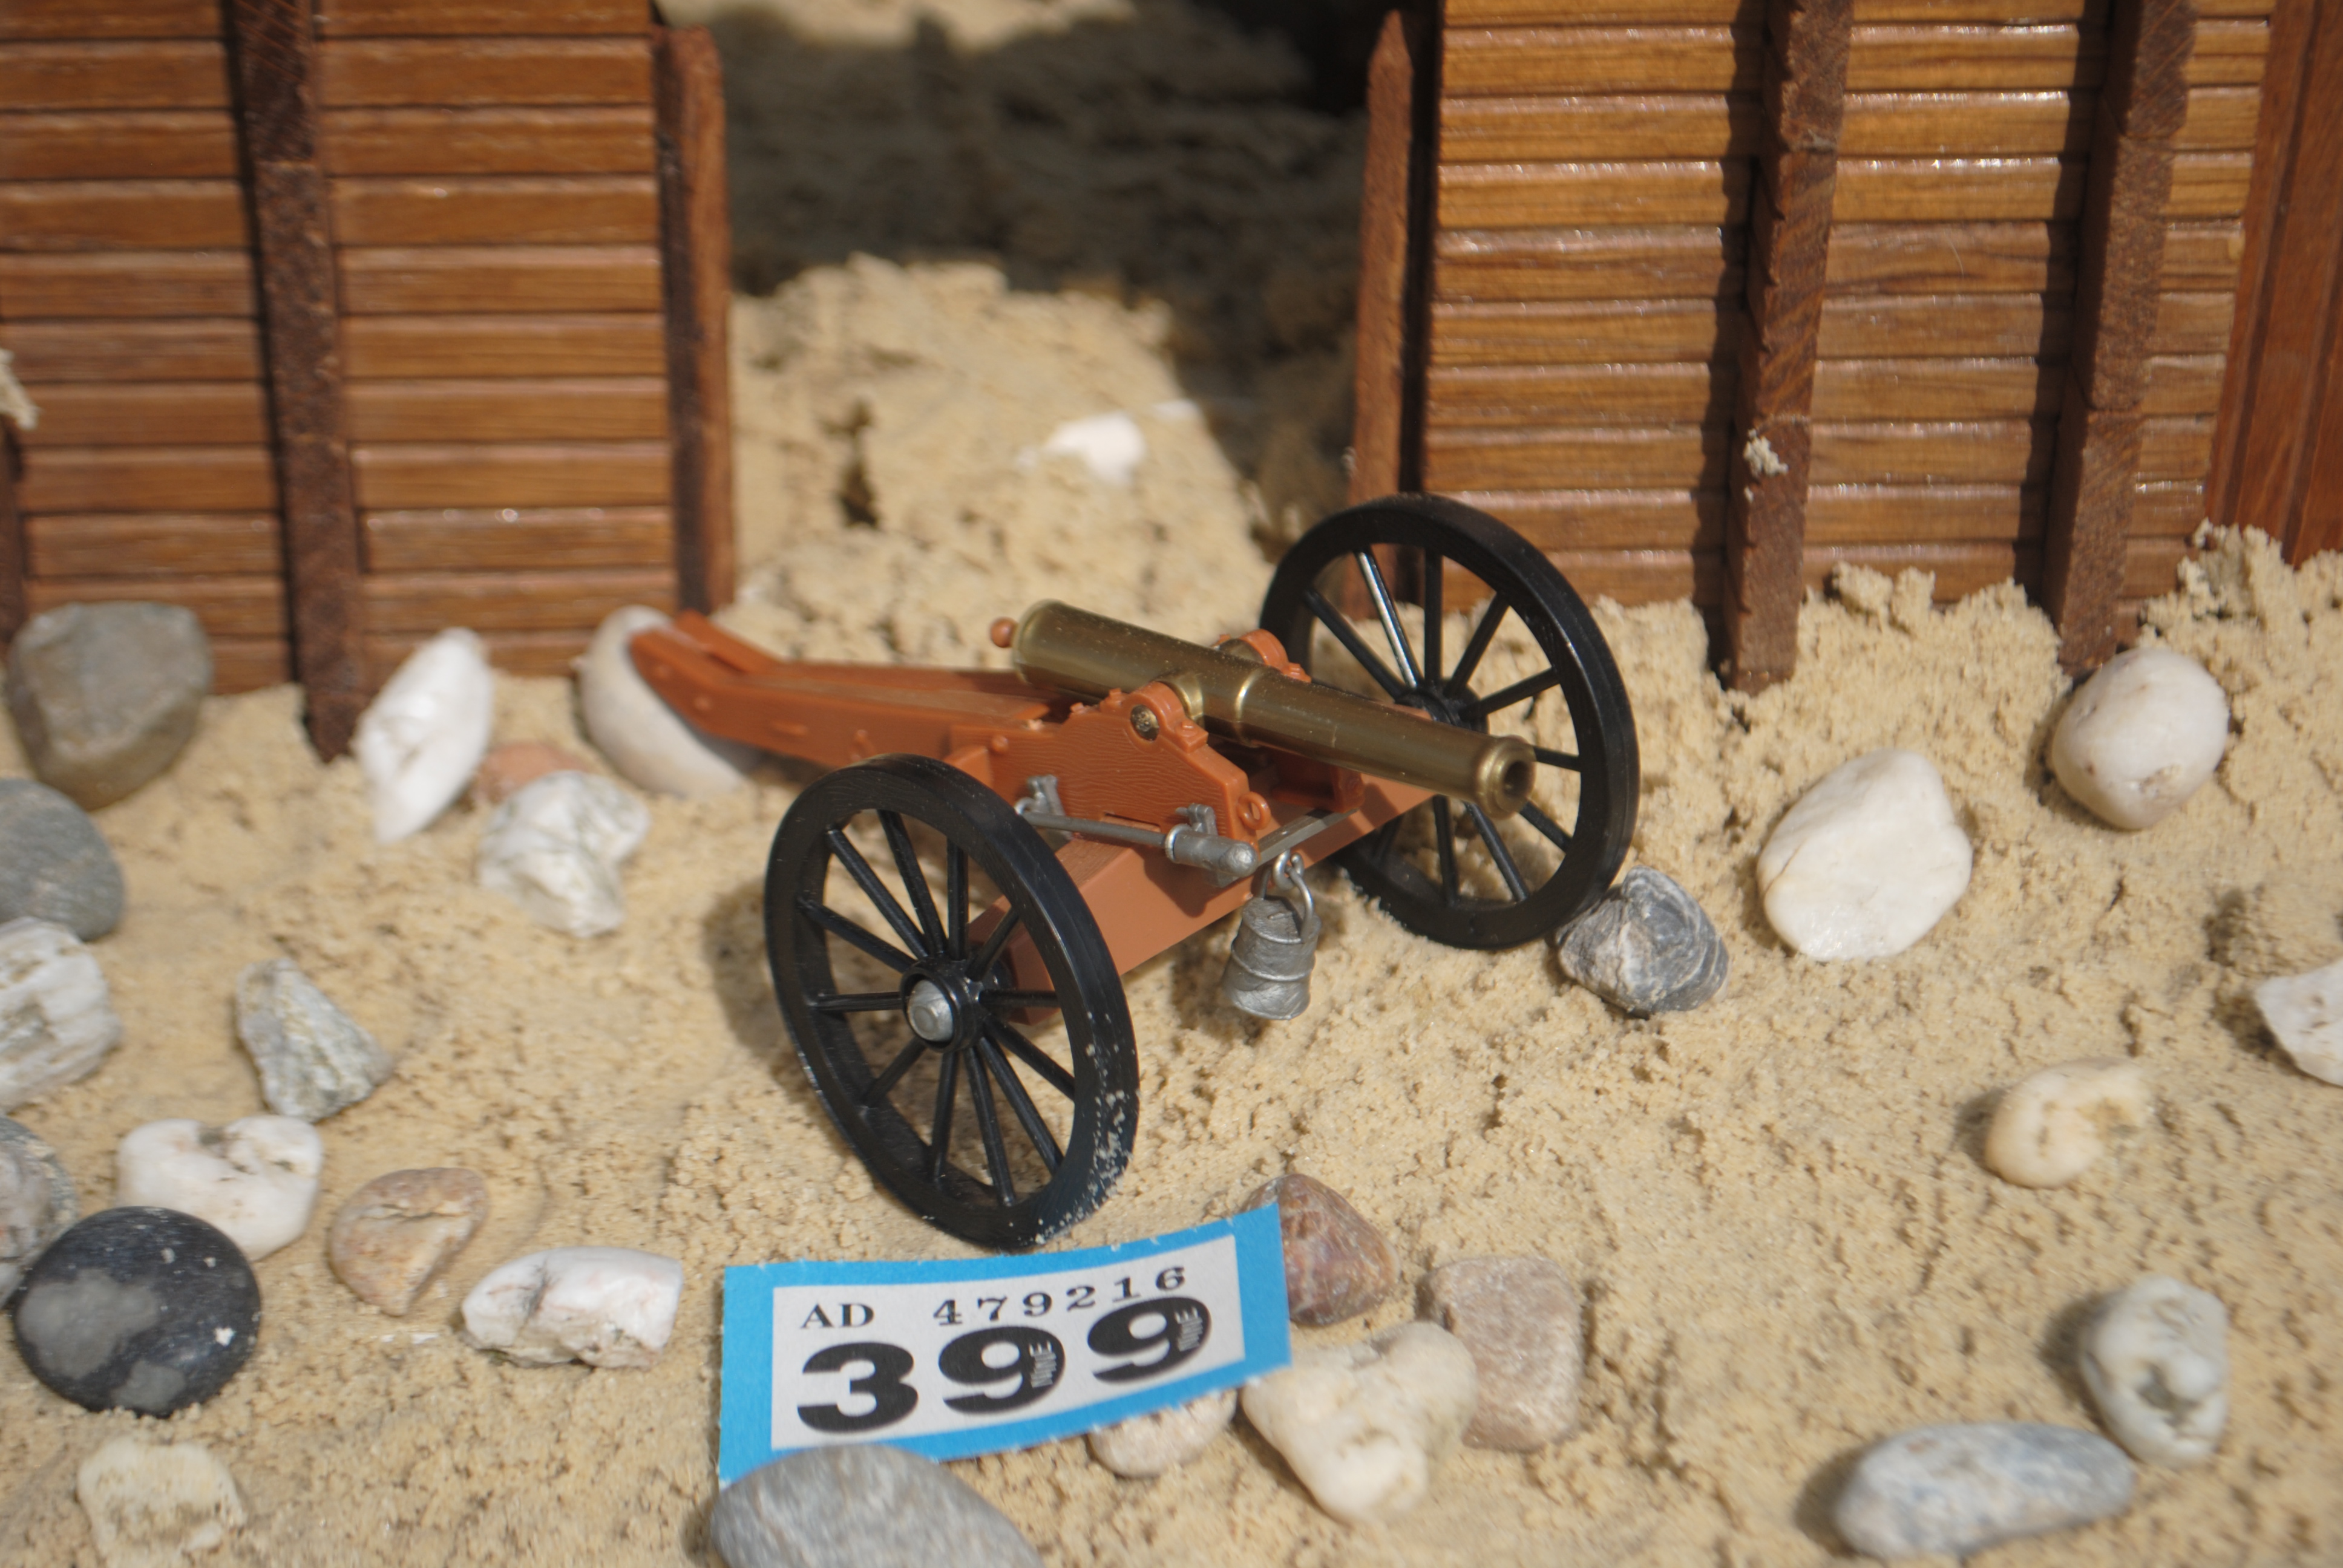 Timpo Toys B.399 American Civil War 6 POUNDER FIELD GUN CANNON ARTILLERY PIECE  